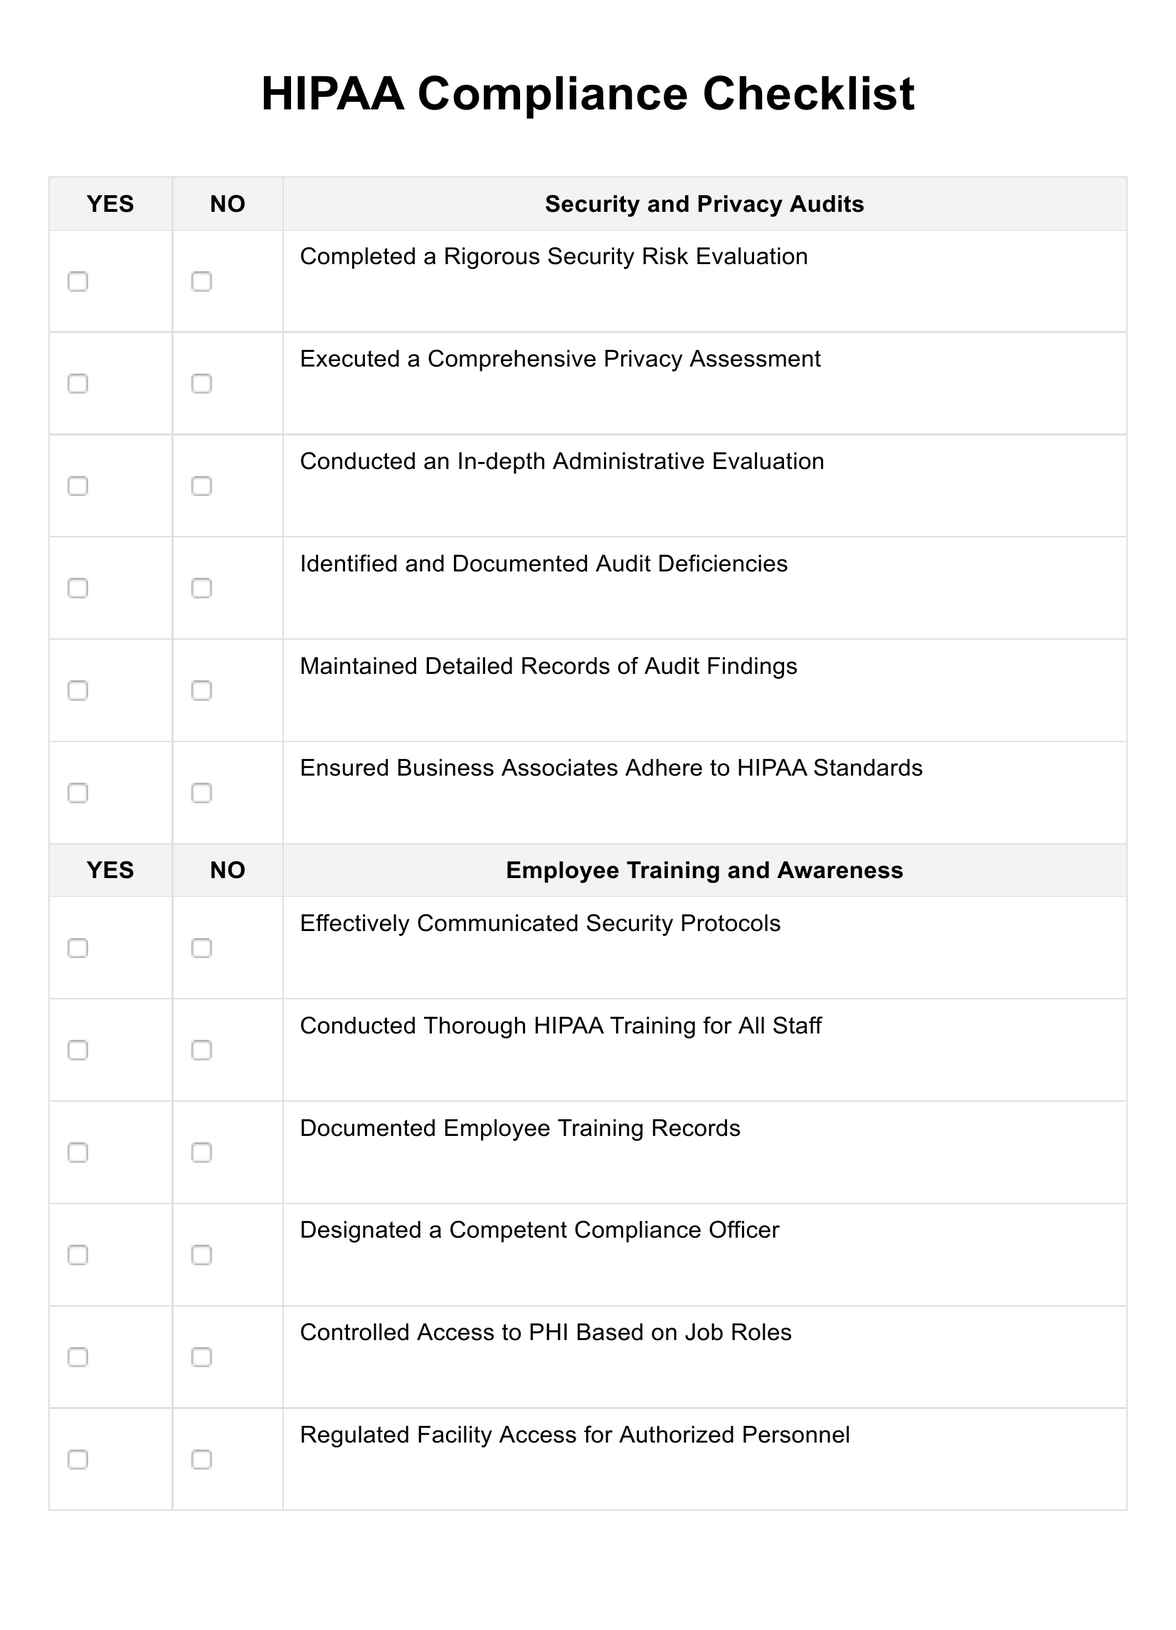 HIPAA Compliance Checklist PDF Example